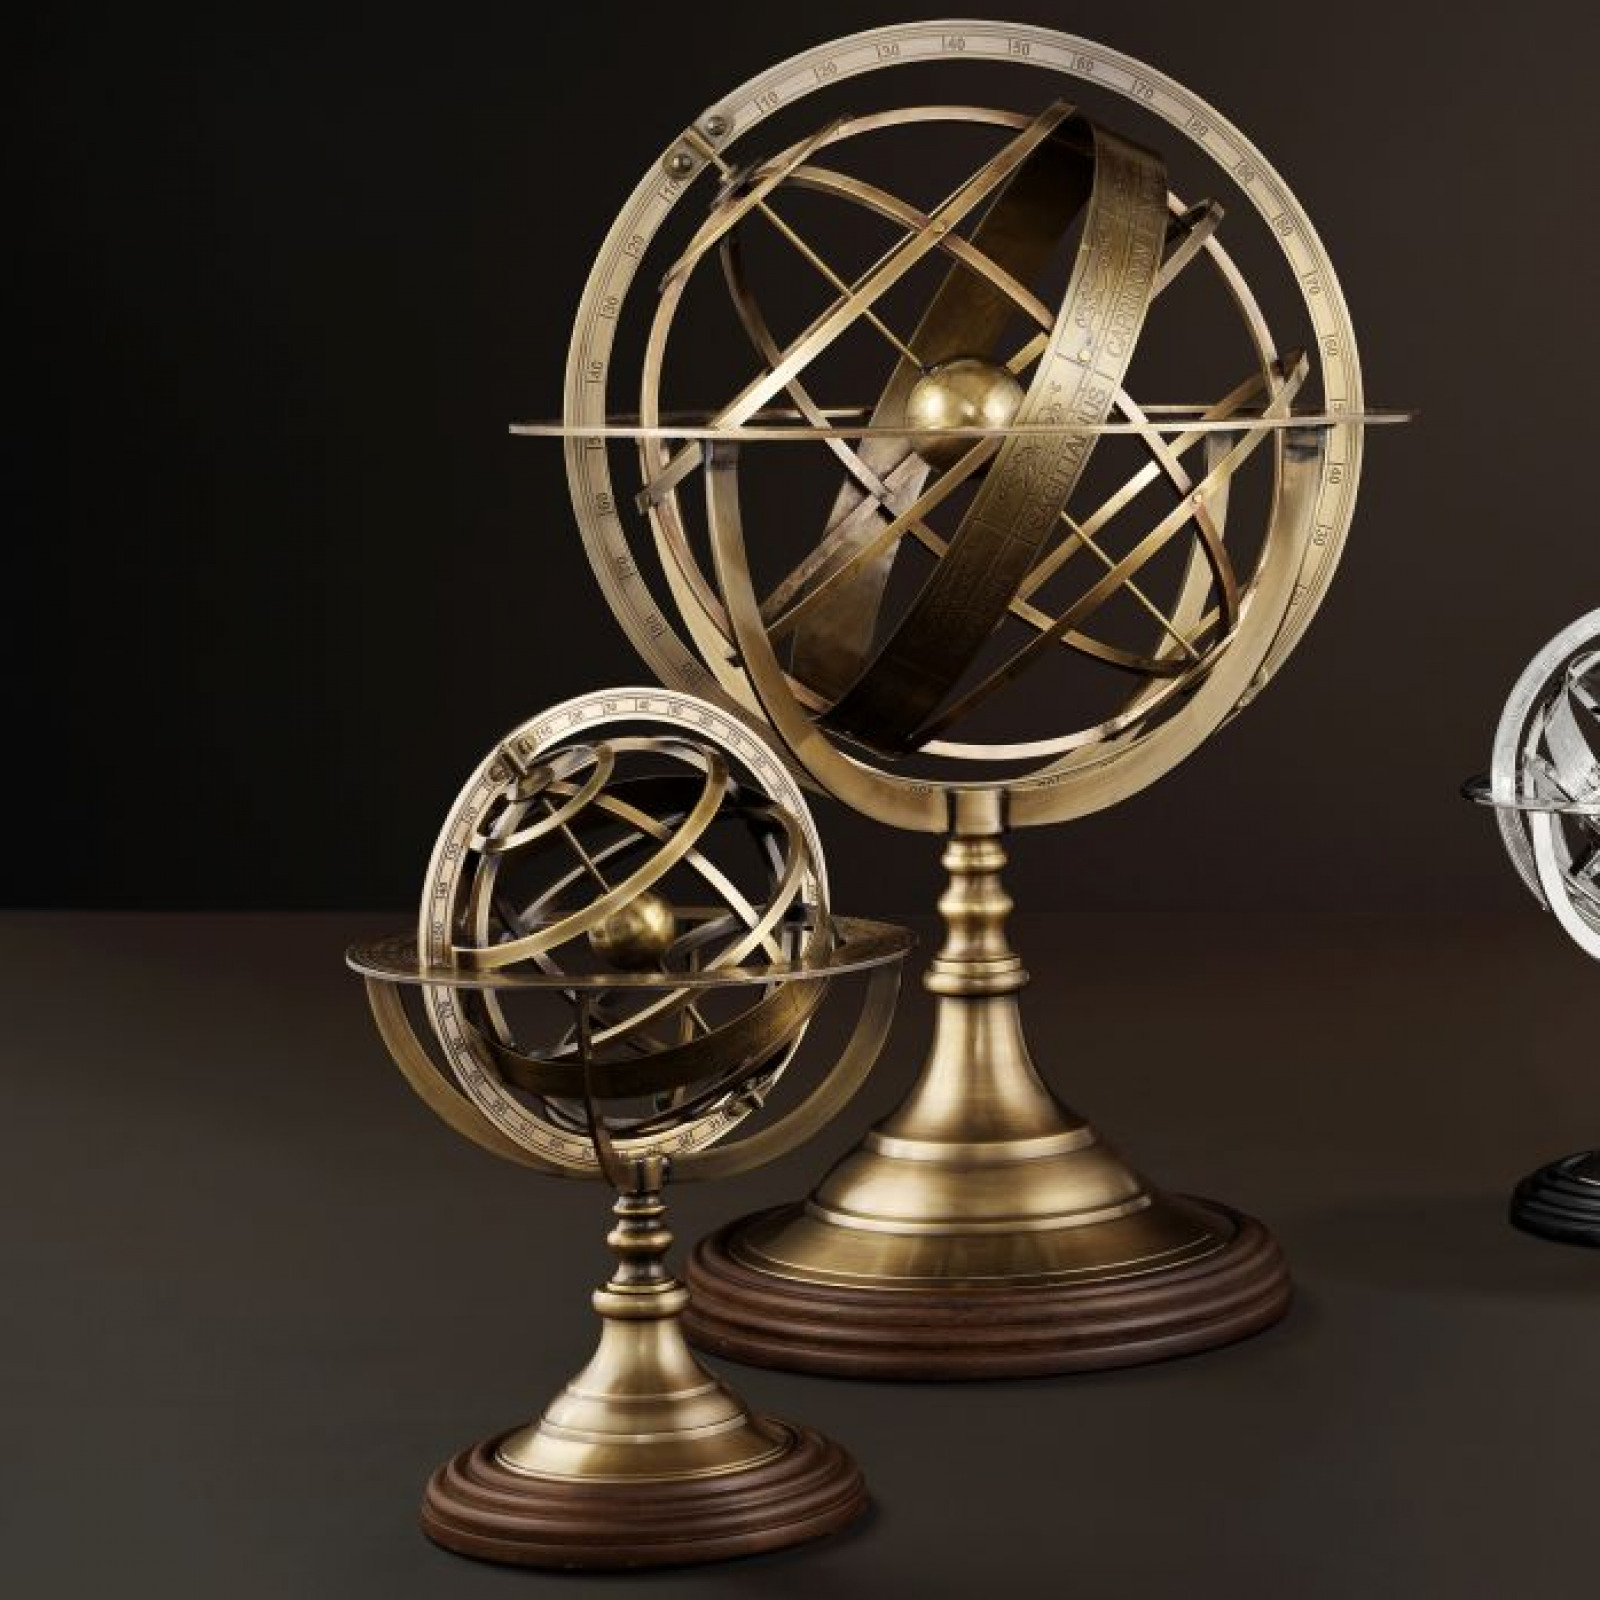 Antique brass globe decor